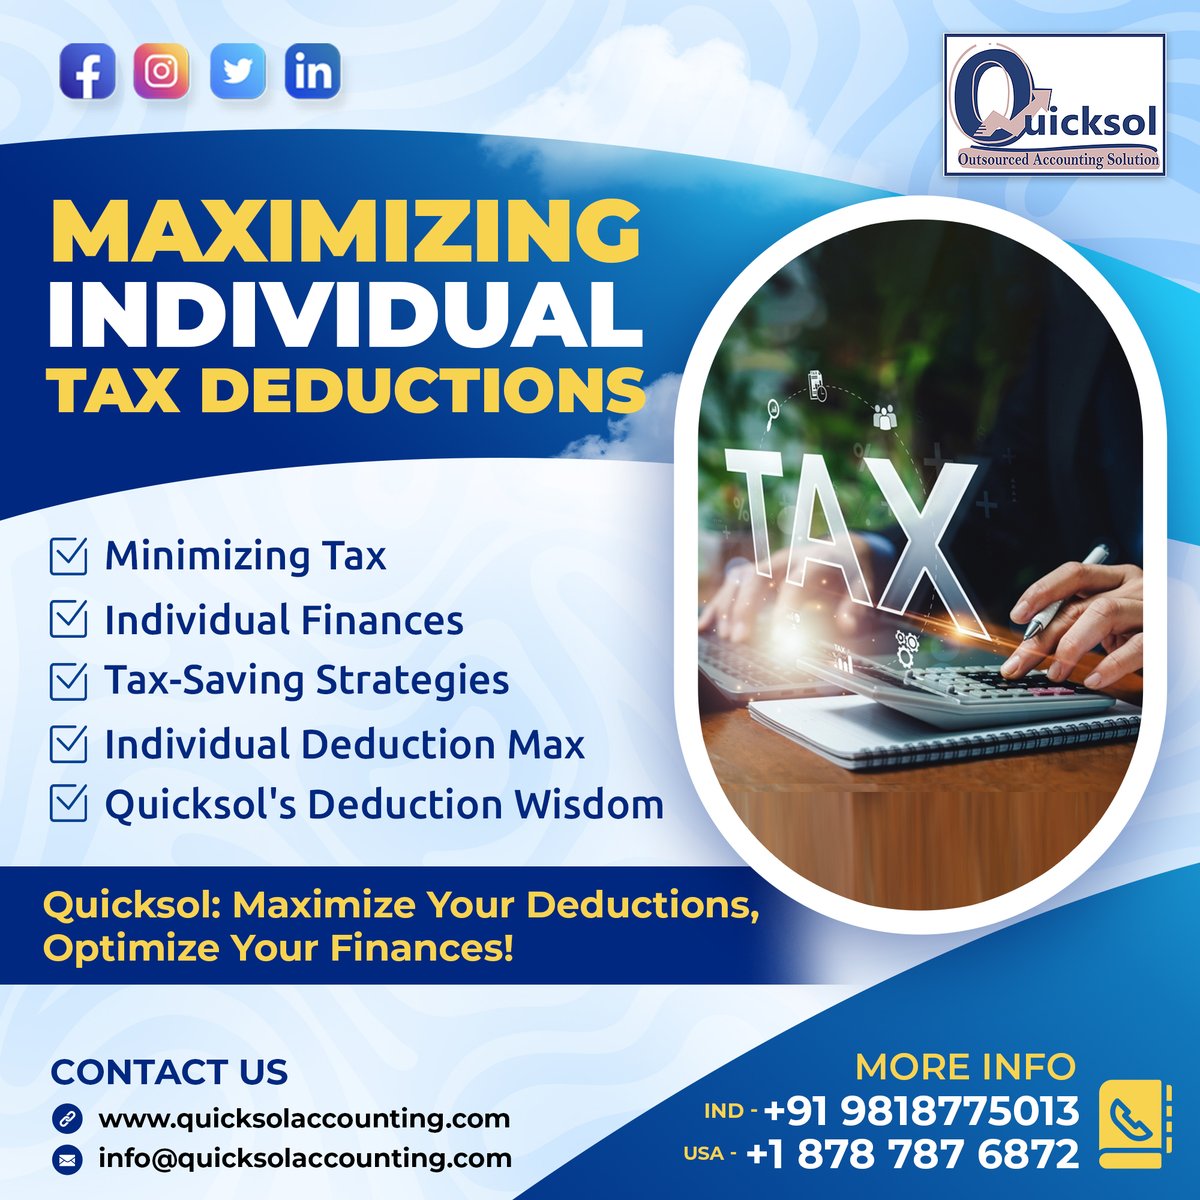 Quicksol: Maximizing Your Individual Tax Deductions for Optimal Financial Efficiency!

#IndividualTaxMax #TaxSavingStrategies #QuicksolDeductionWisdom #OptimizeDeductions #MinimizeTax #FinancialOptimization #DeductionMaximization